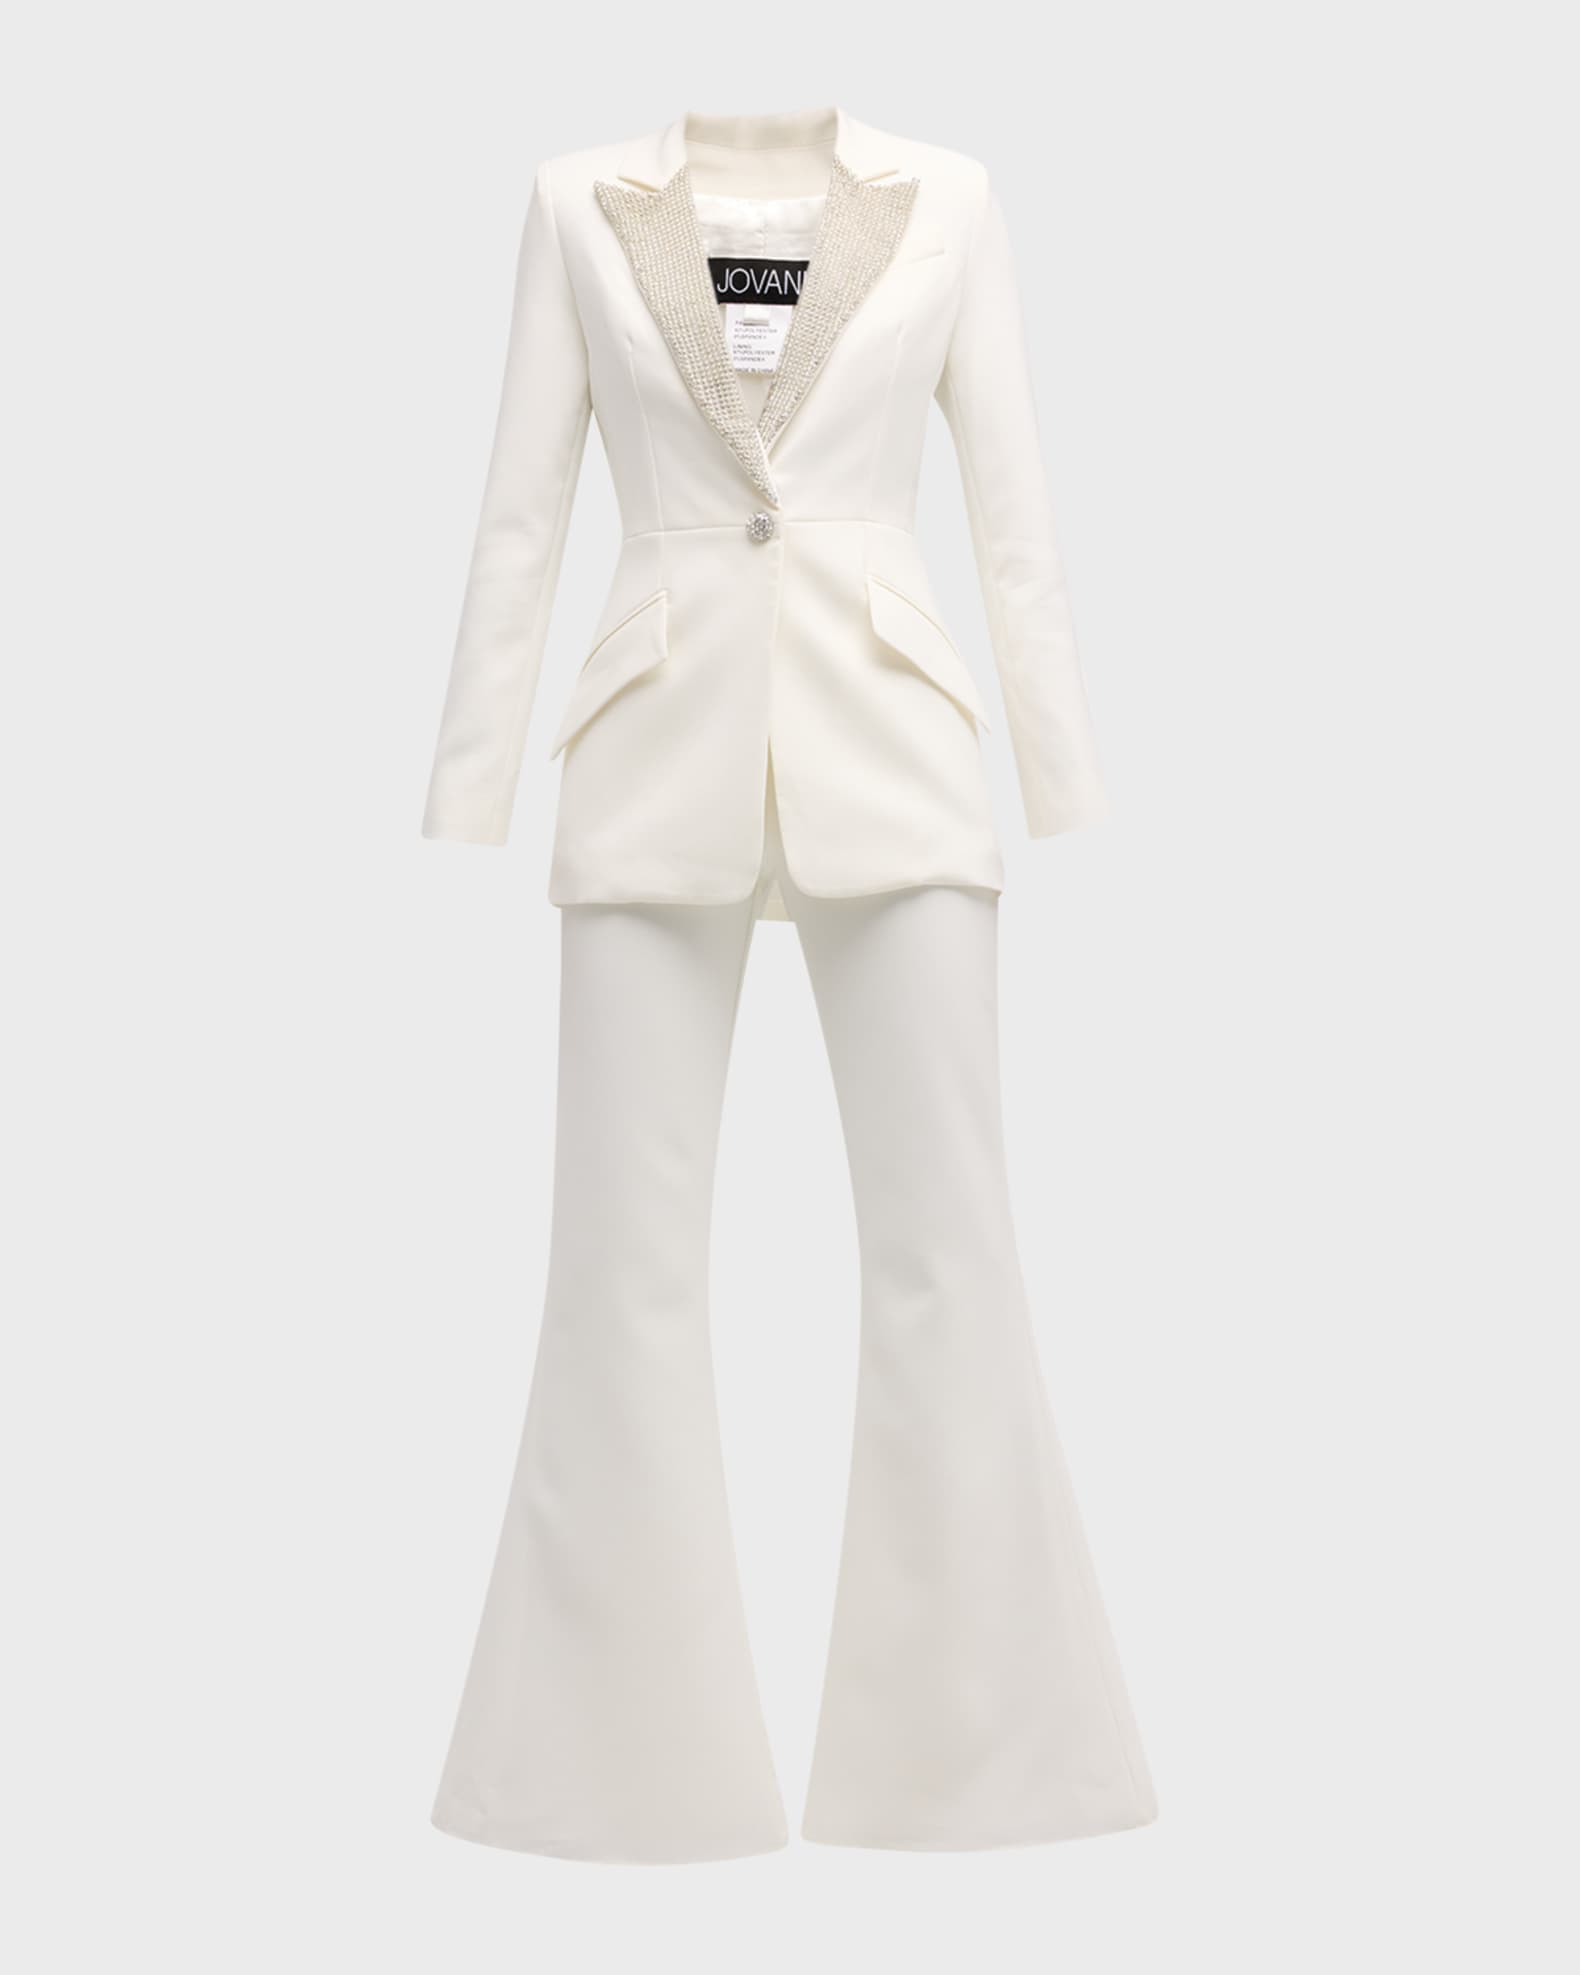 Jovani Rhinestone-Embellished Two-Piece Pants Suit | Neiman Marcus